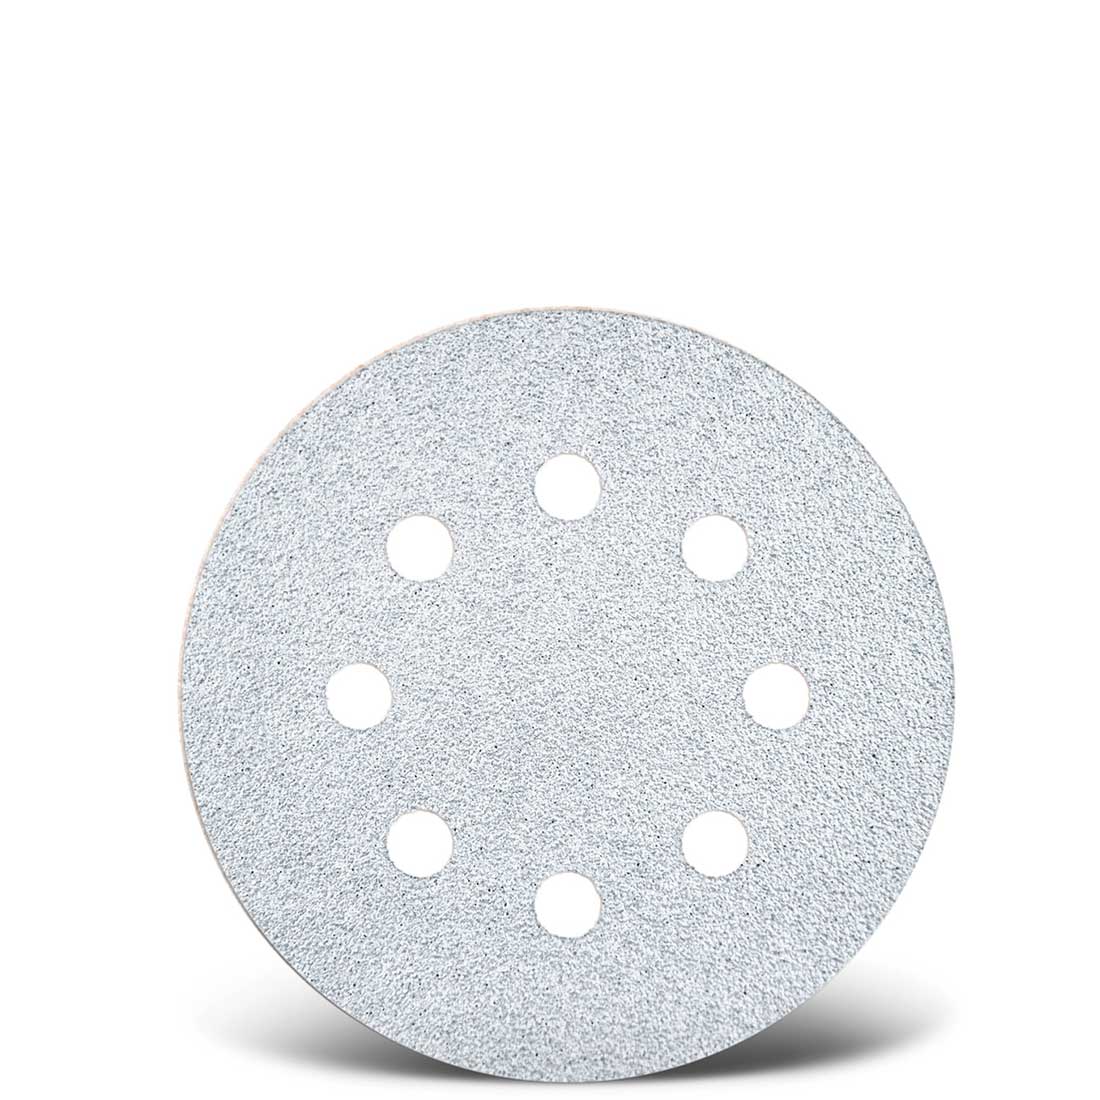 MENZER hook & loop sanding discs for random orbital sanders, G40–400, Ø 125 mm / 8 hole / stearated aluminium oxide